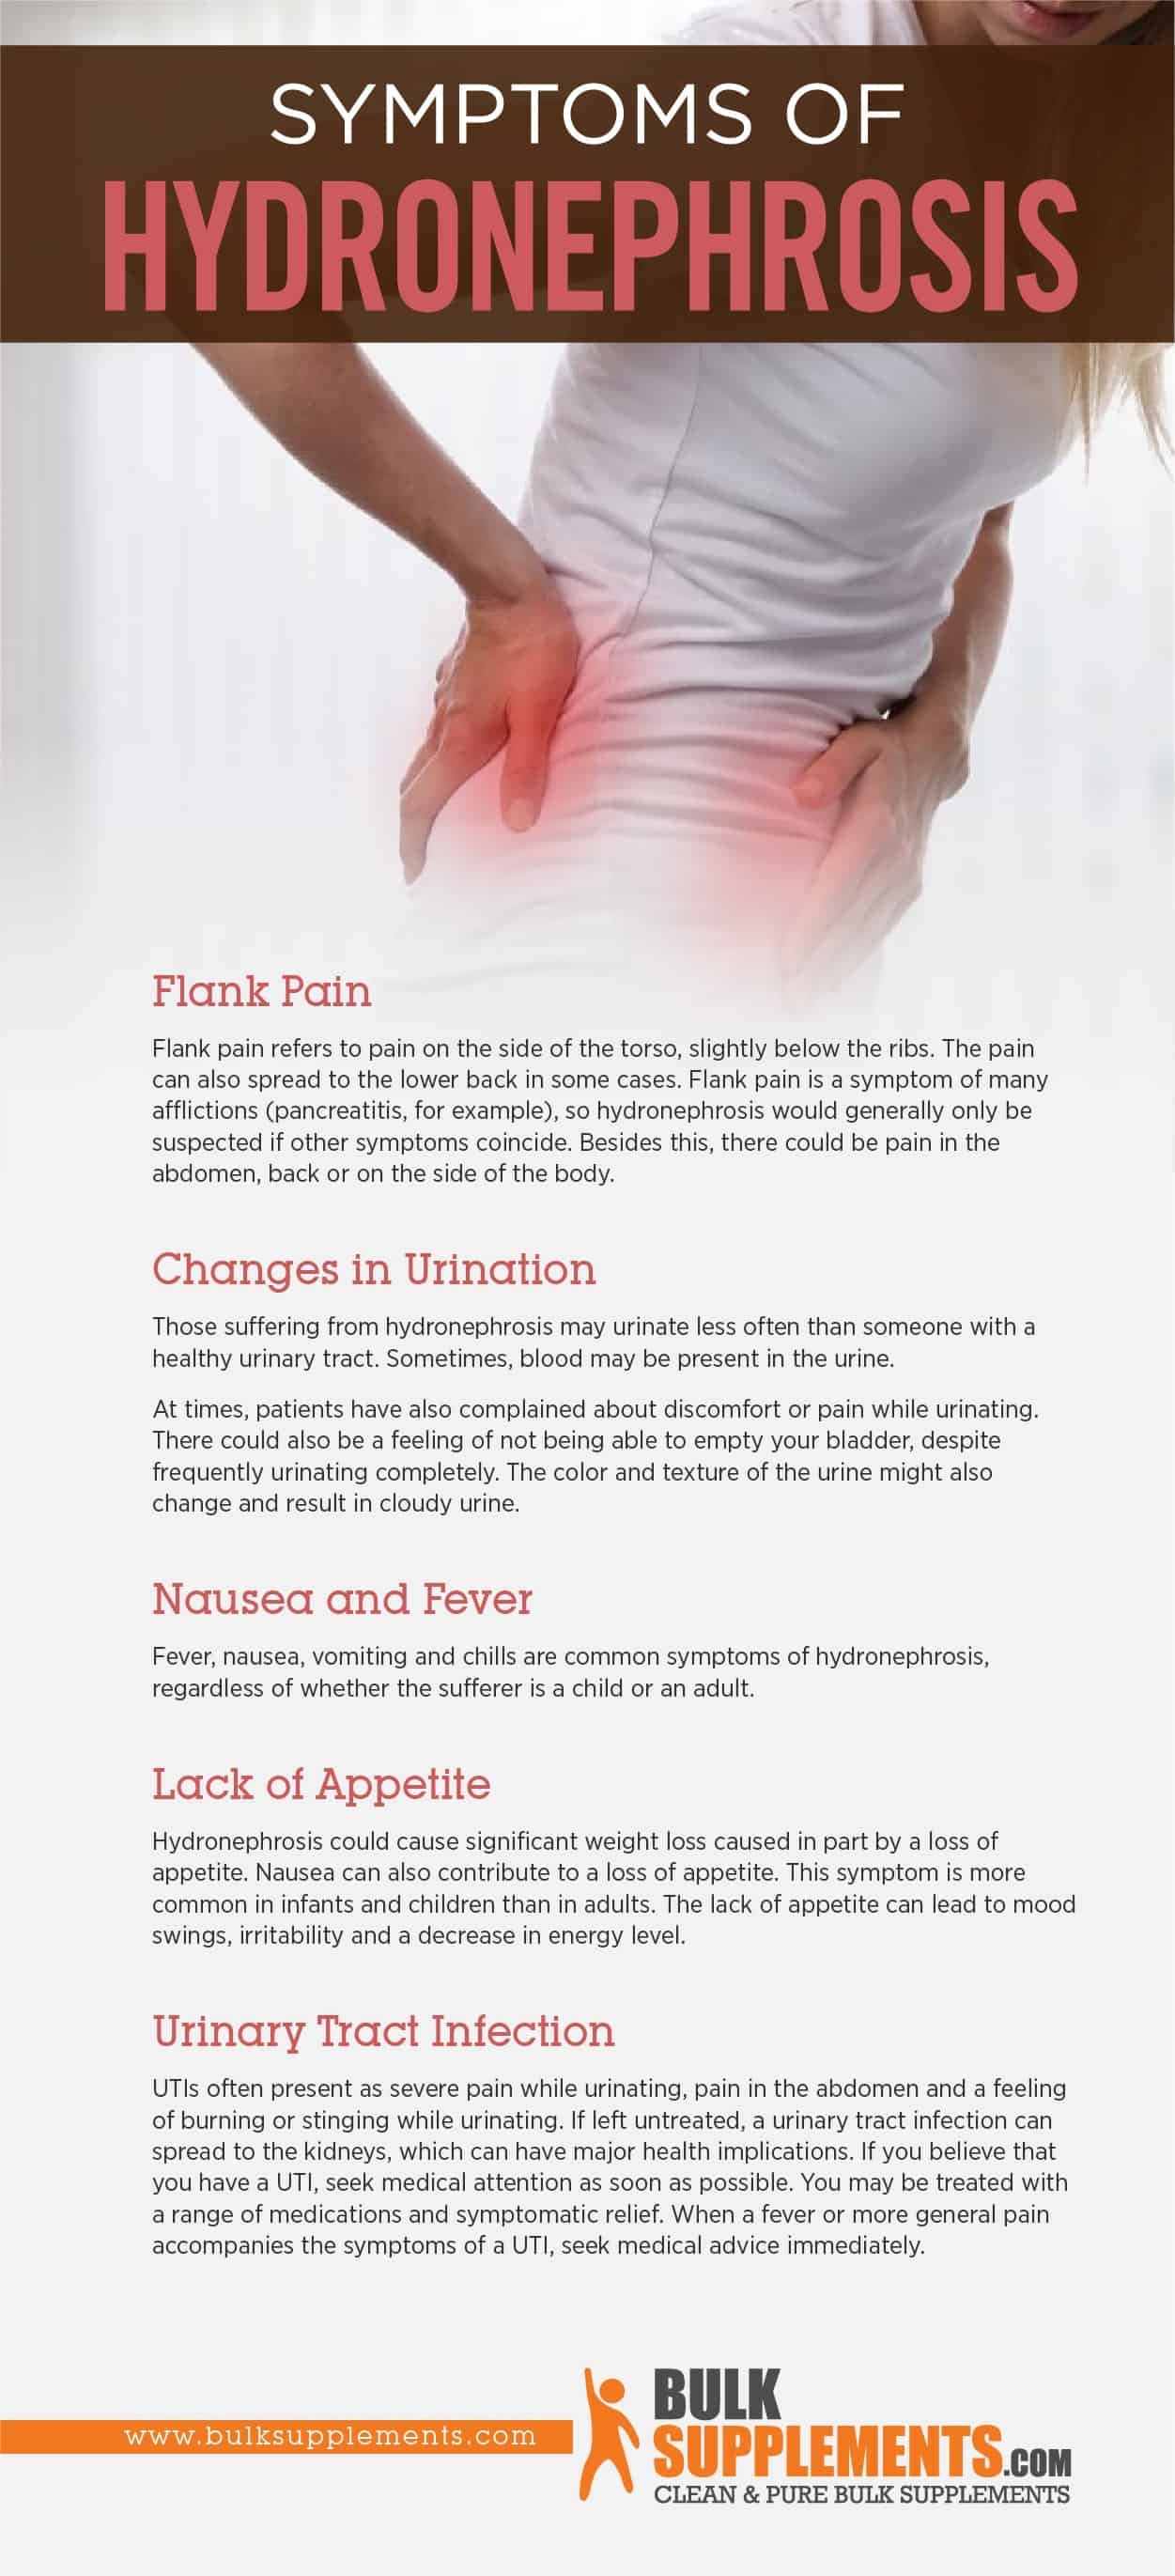 Symptoms of Hydronephrosis